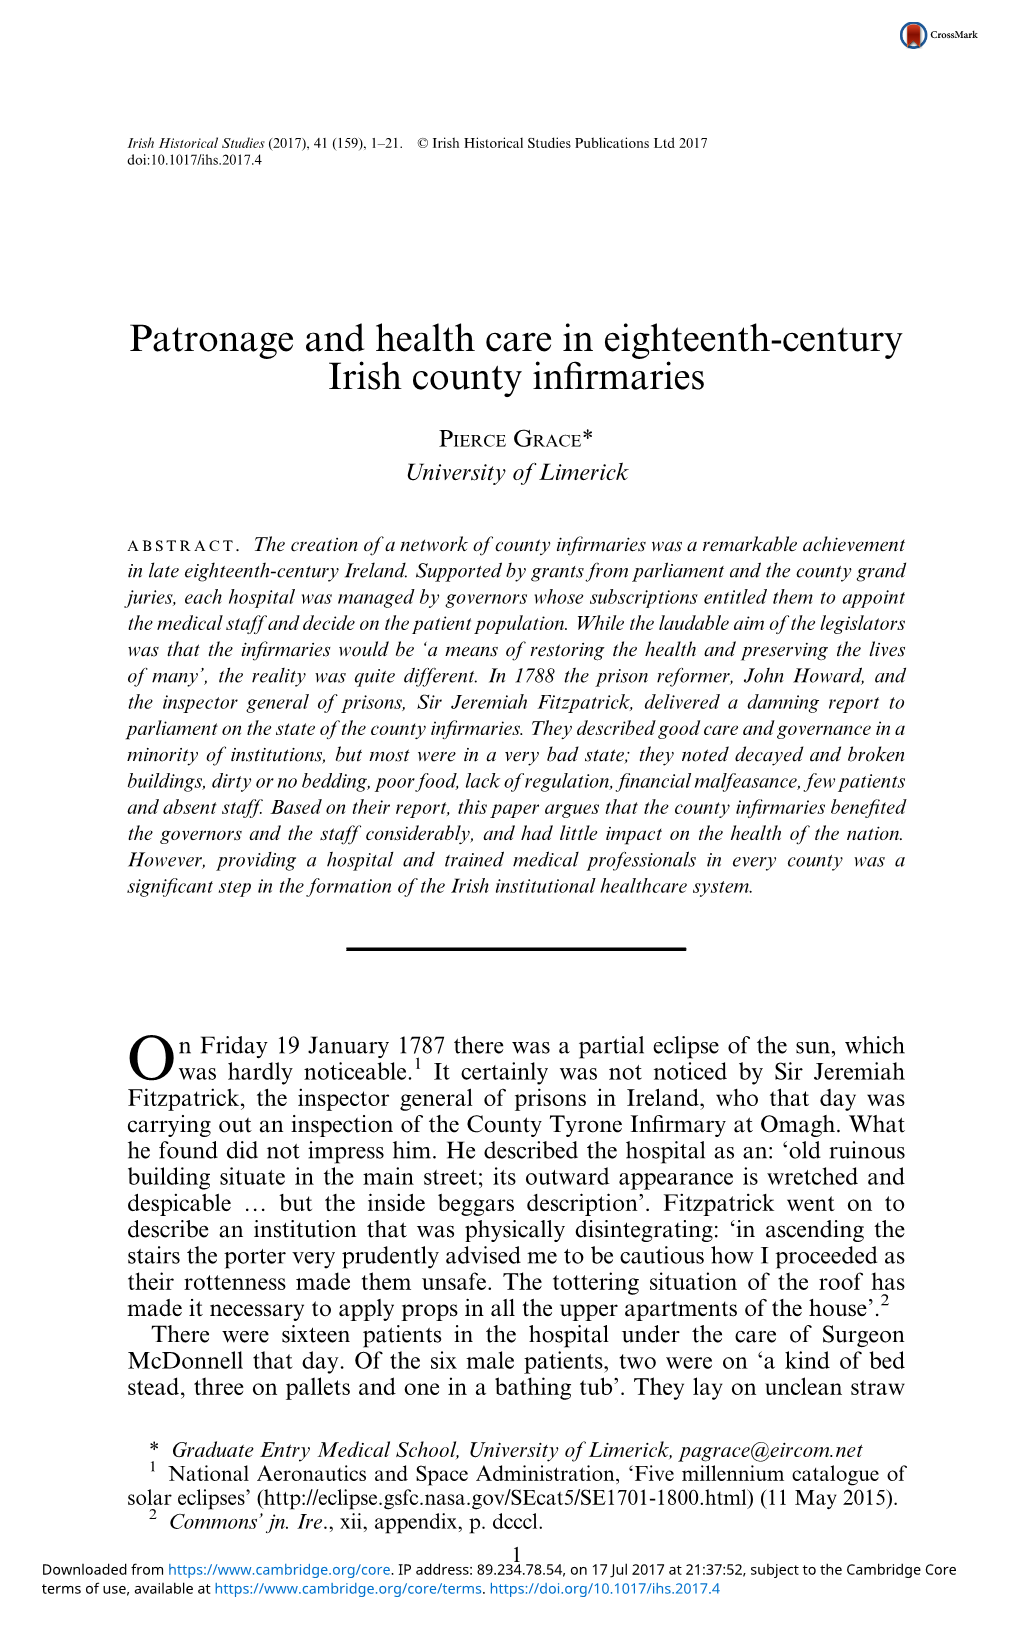 Patronage and Health Care in Eighteenth-Century Irish County Inﬁrmaries